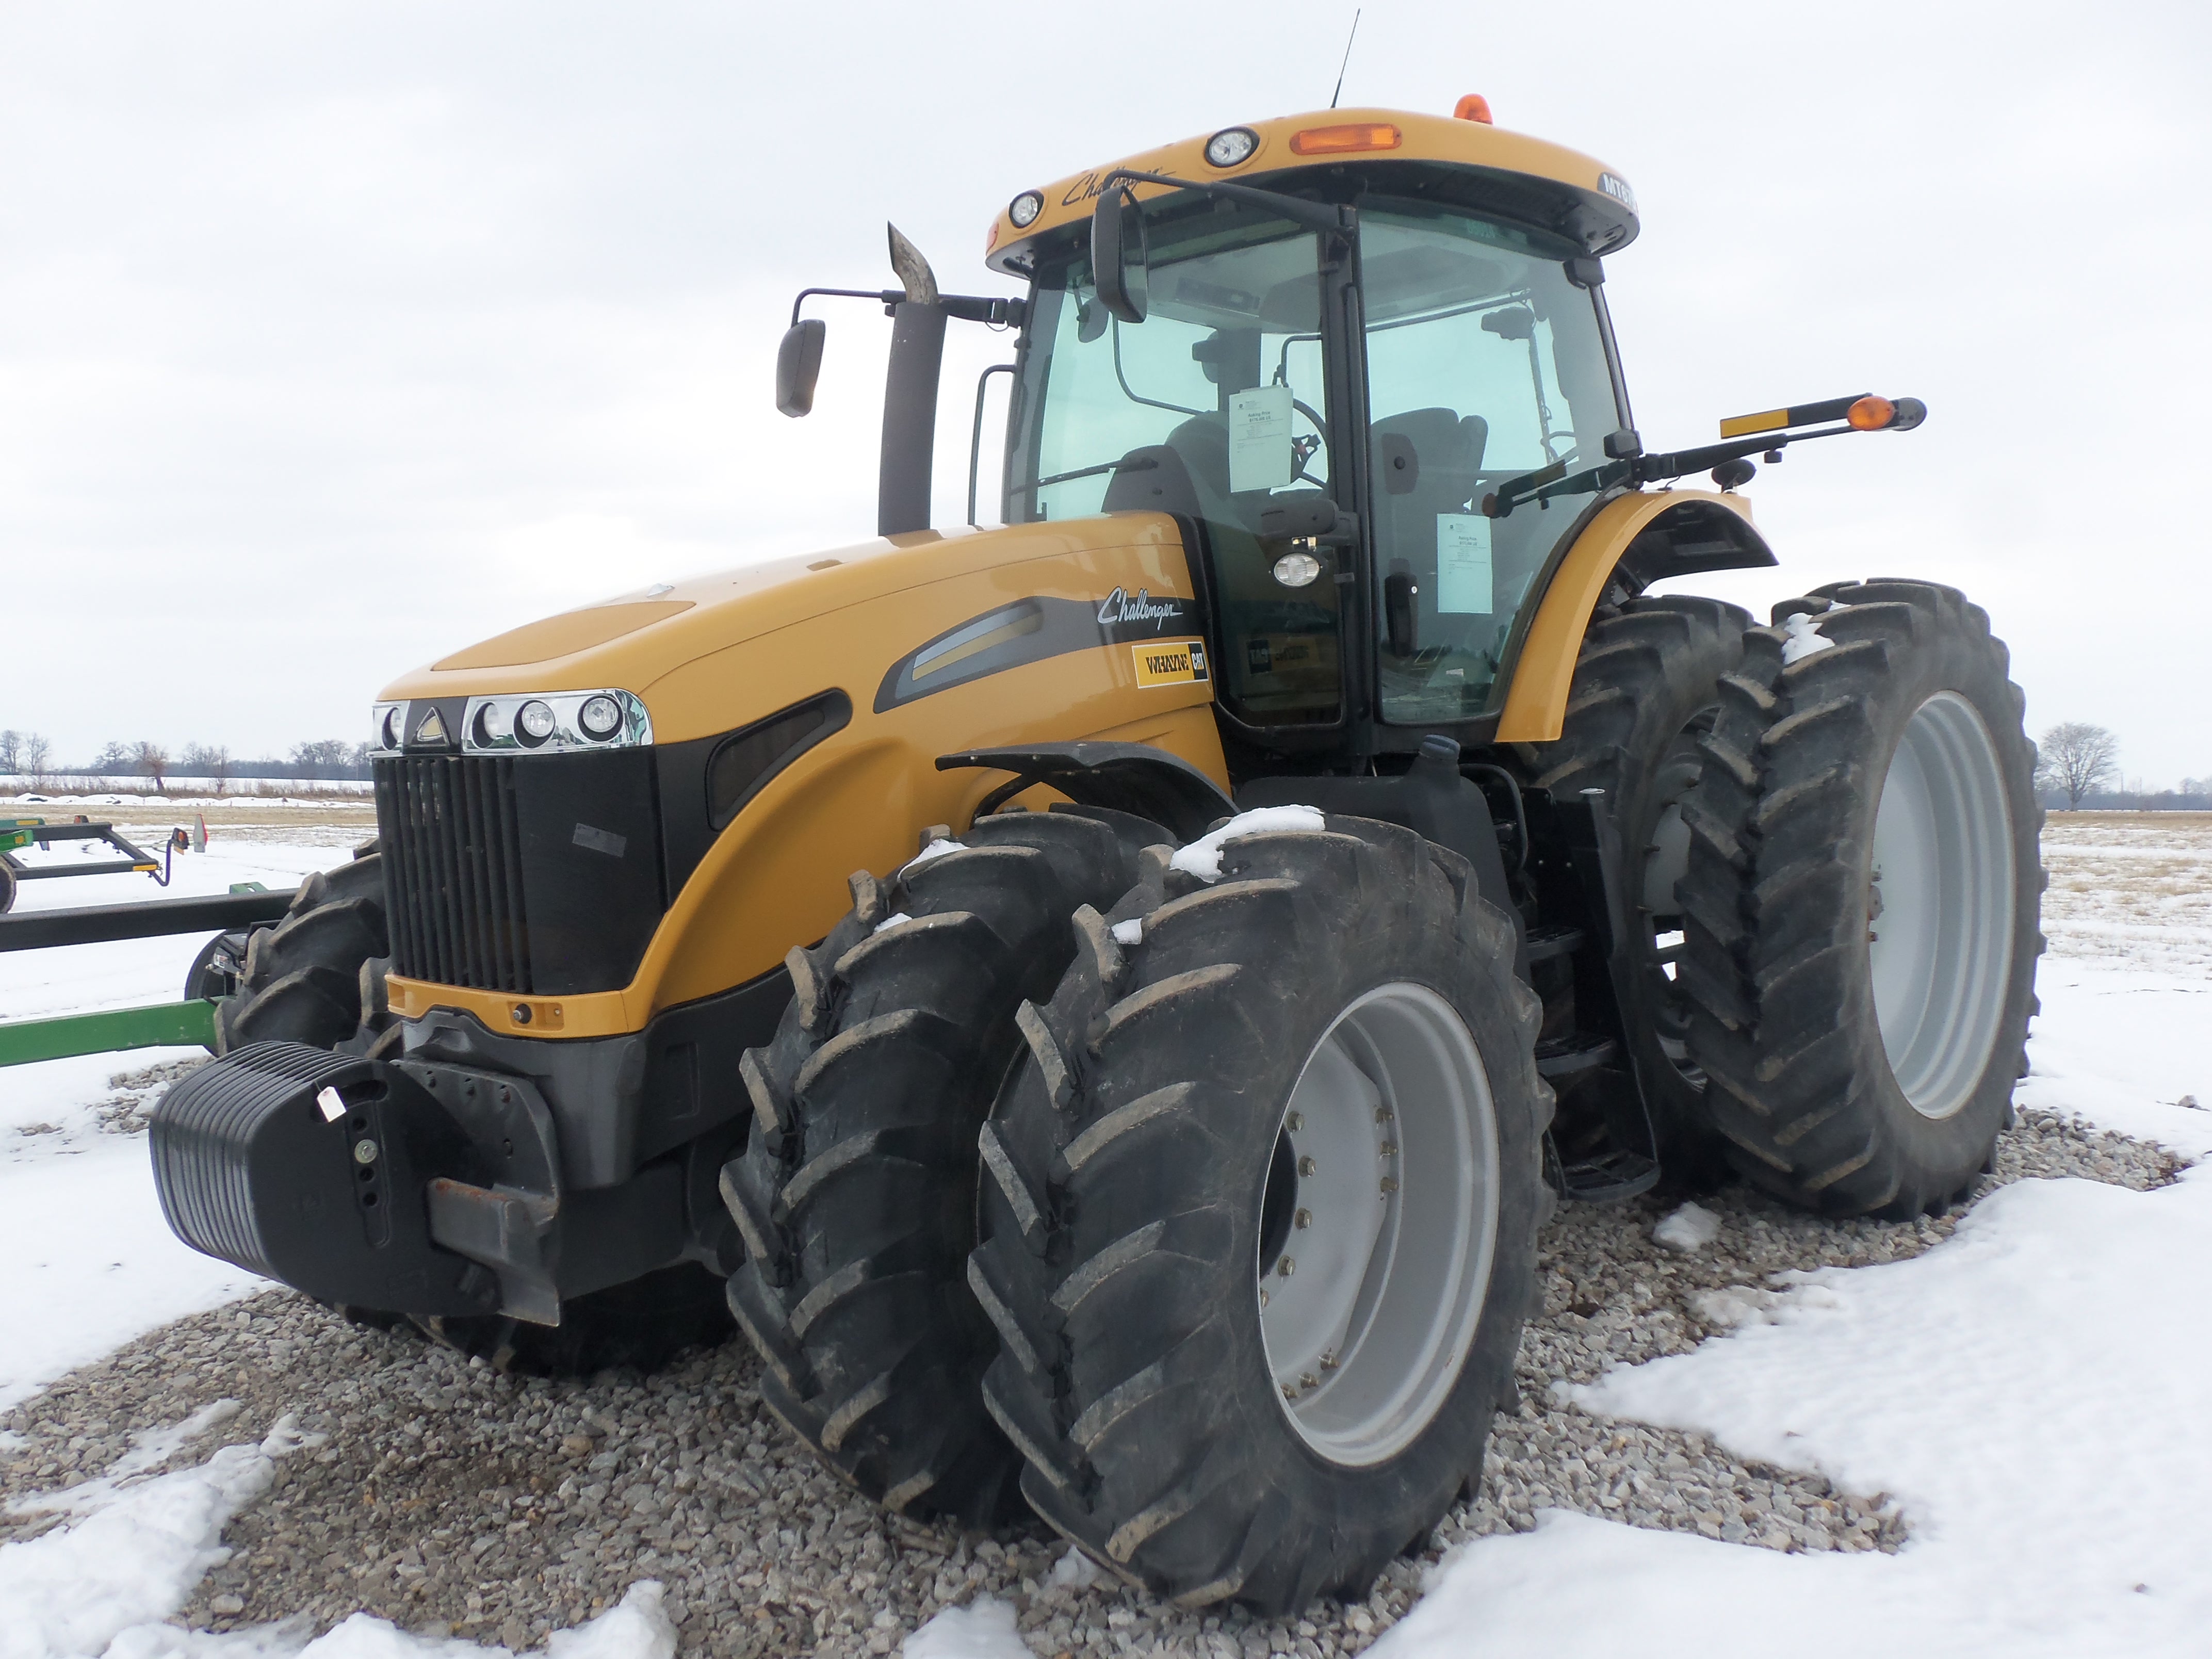 Challenger MT675C tractor | Farm Stuff | Pinterest